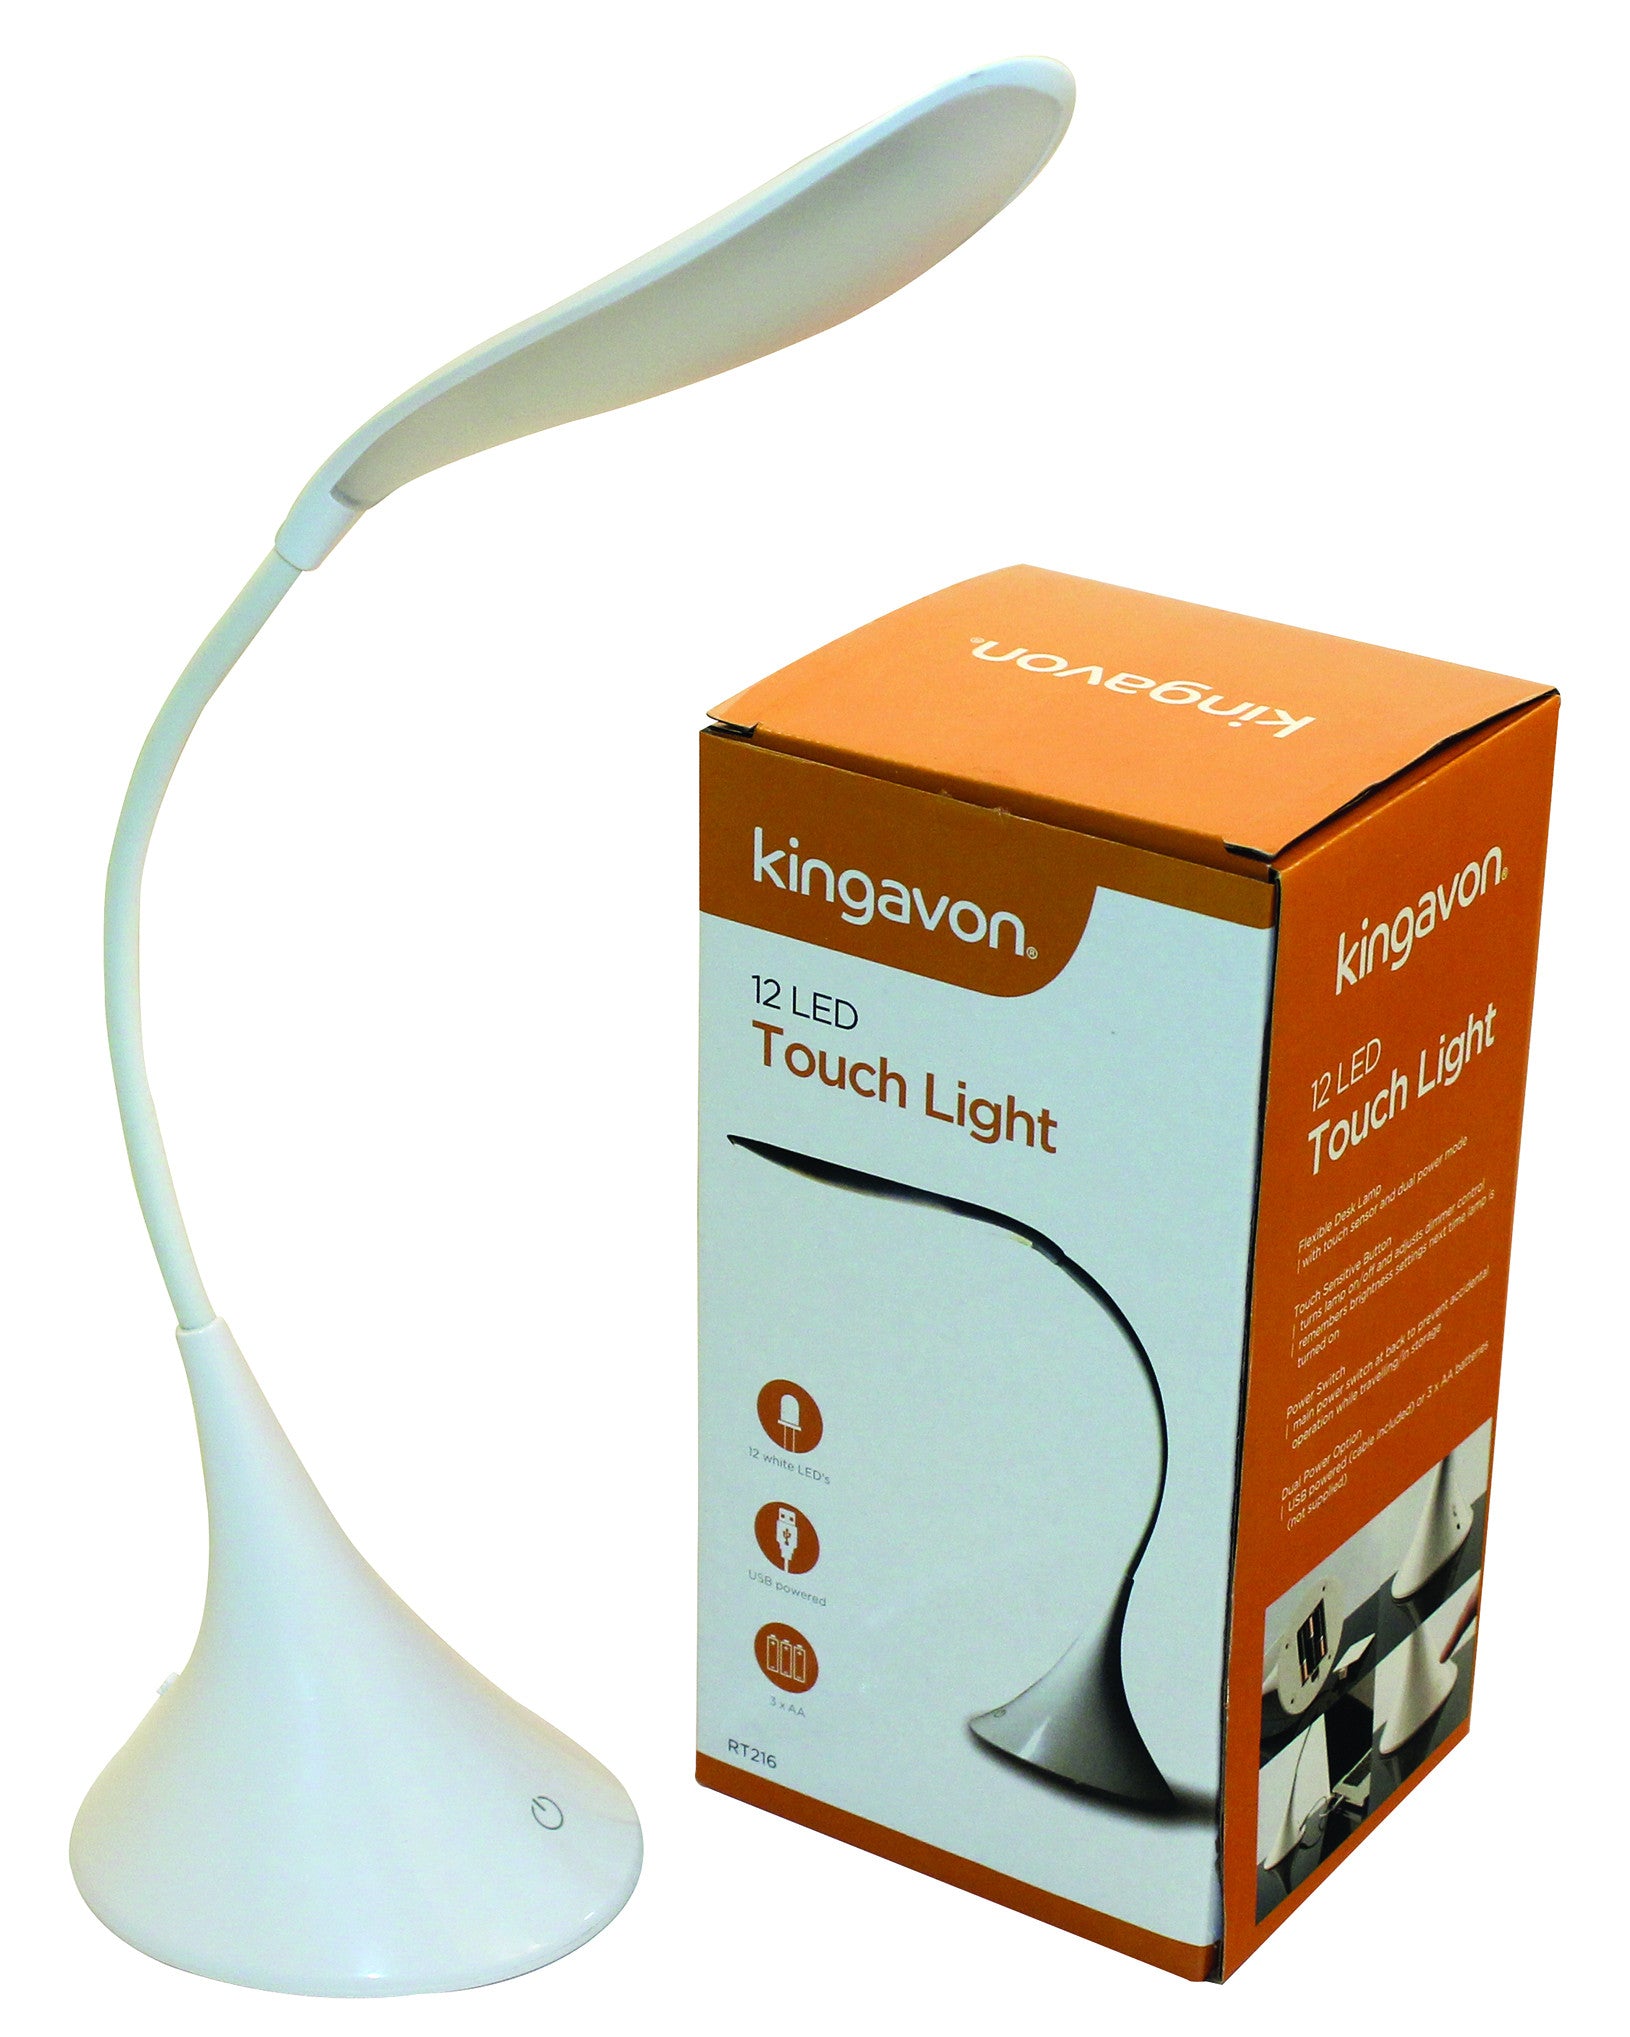 Kingavon 12 LED Touch Light